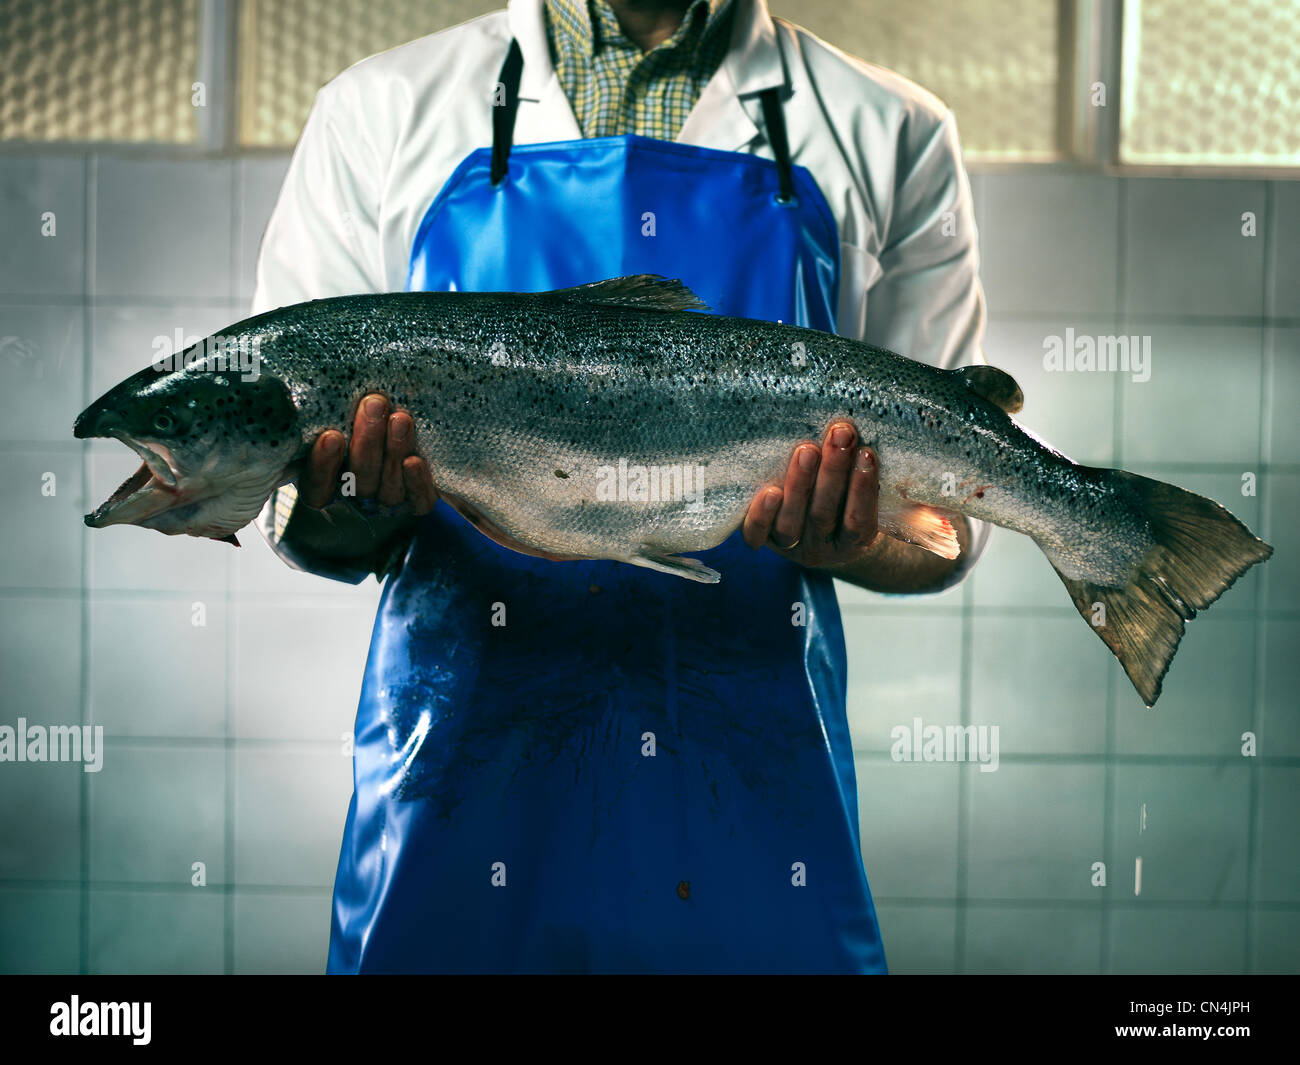 Fishmonger holding a salmon Stock Photo